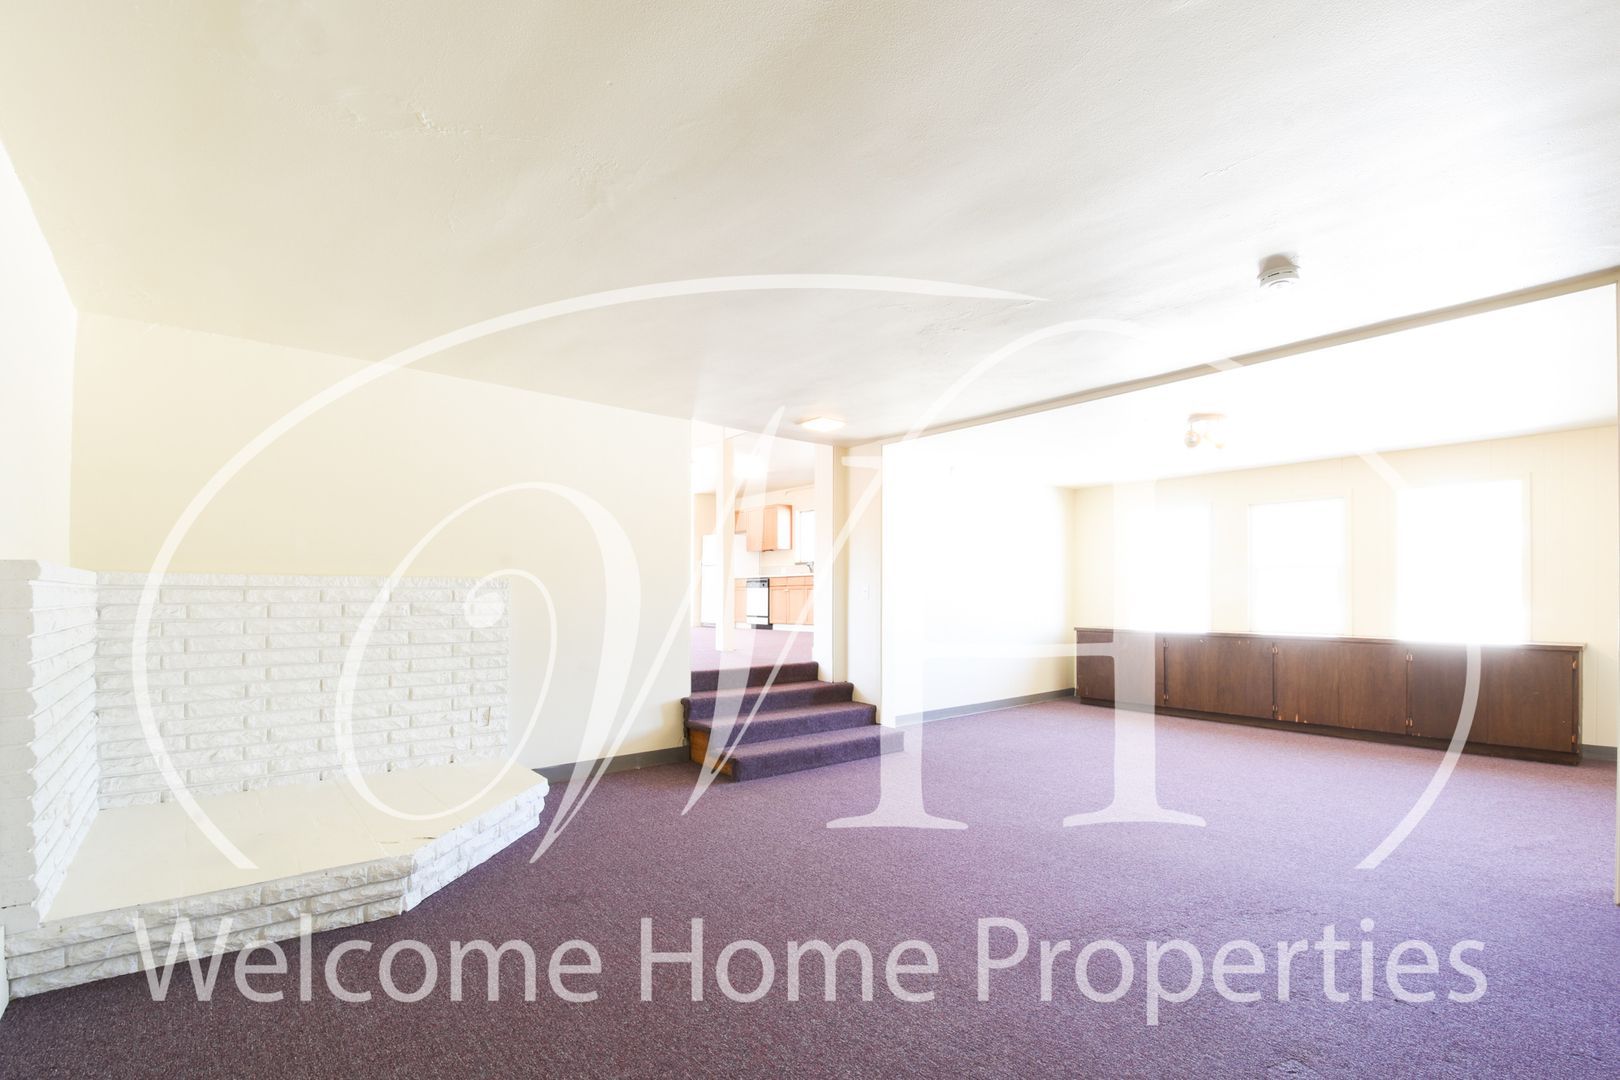 Welcome Home Properties